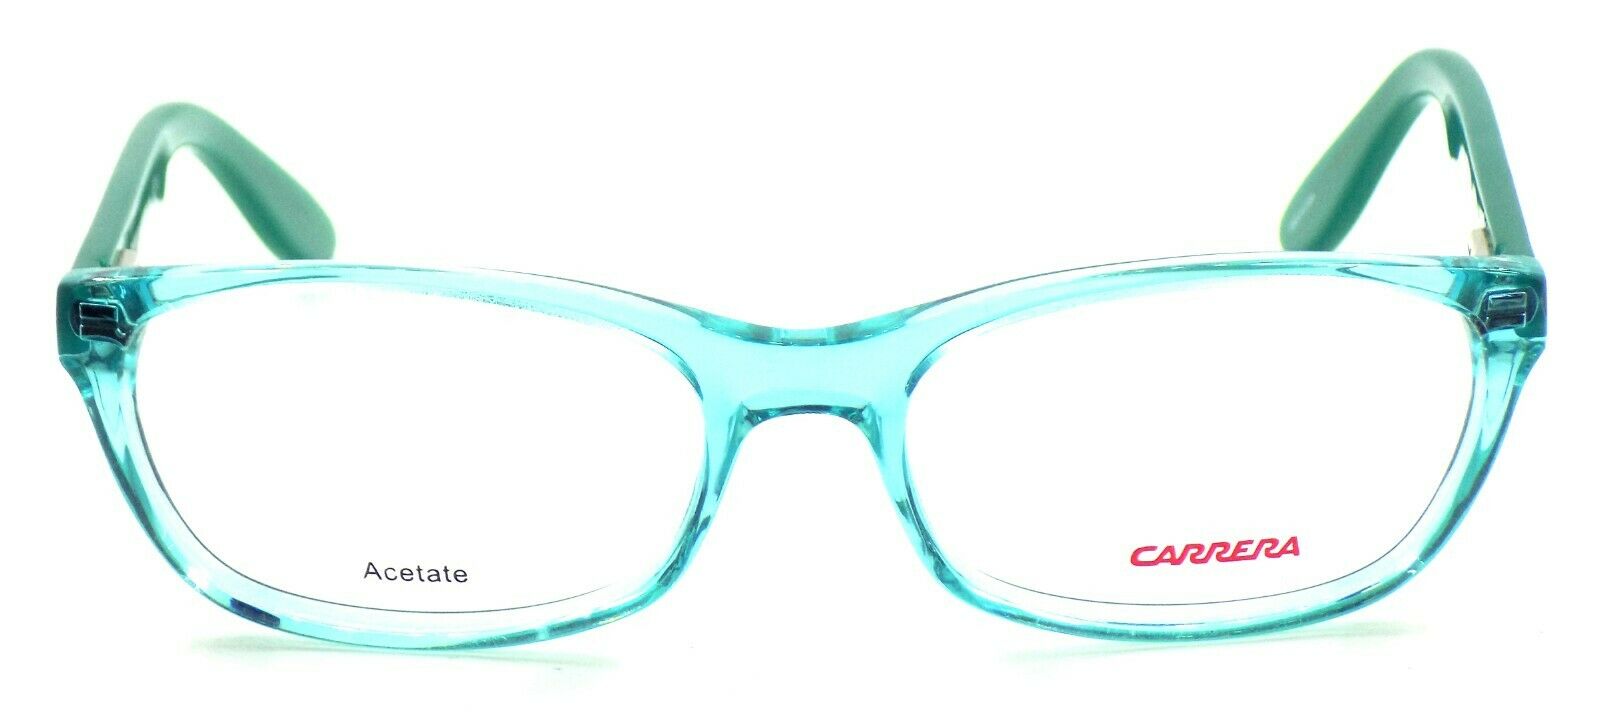 2-Carrera Carrerino 56 TSR Kids' Eyeglasses Frames 50-16-125 Teal + CASE-762753803672-IKSpecs